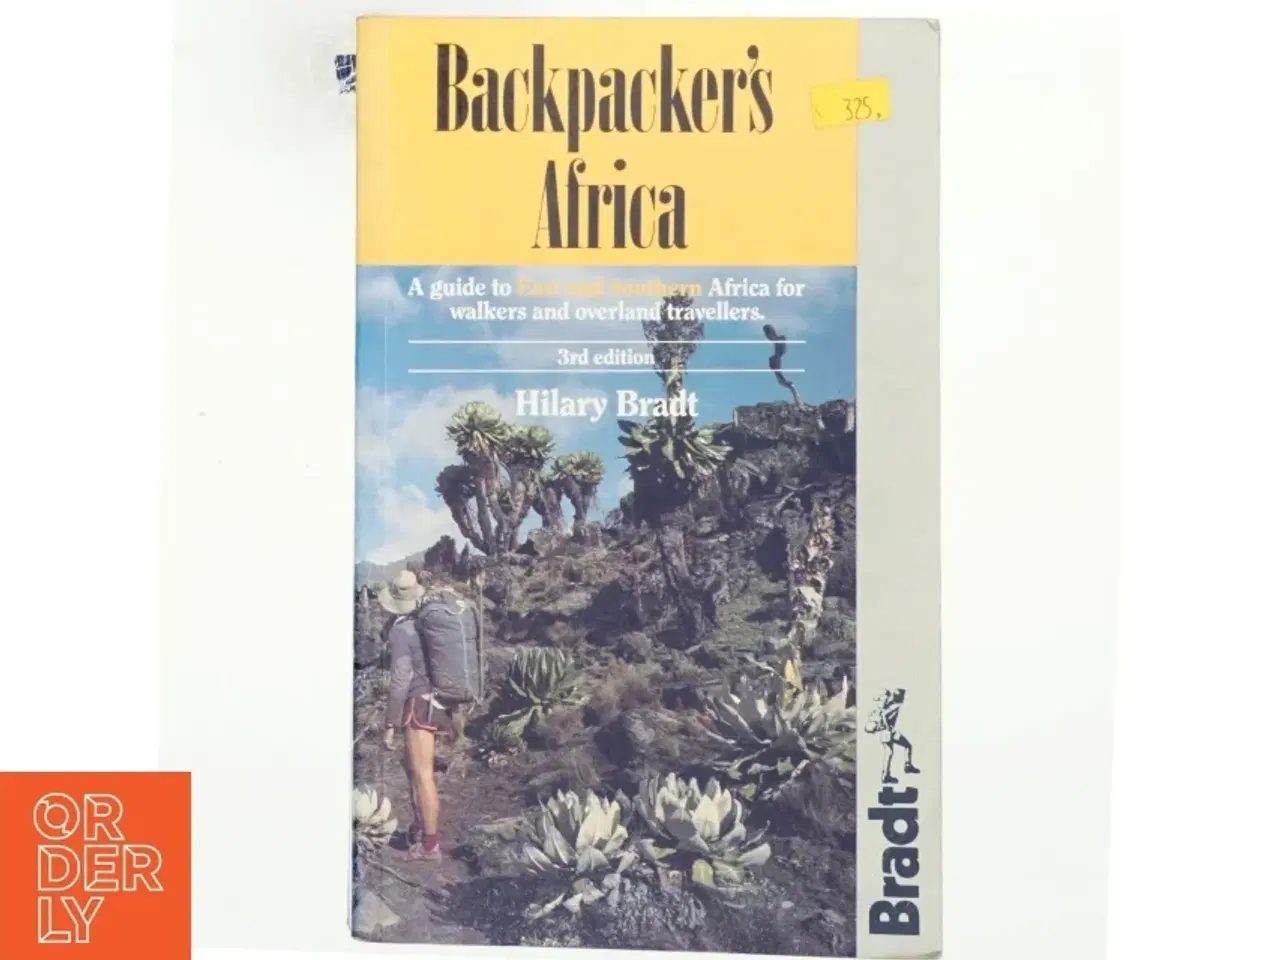 Billede 1 - Backpacker's Africa : a guide to East and Southern Africa for walkers and overland travellers af Hilary Bradt (Bog)